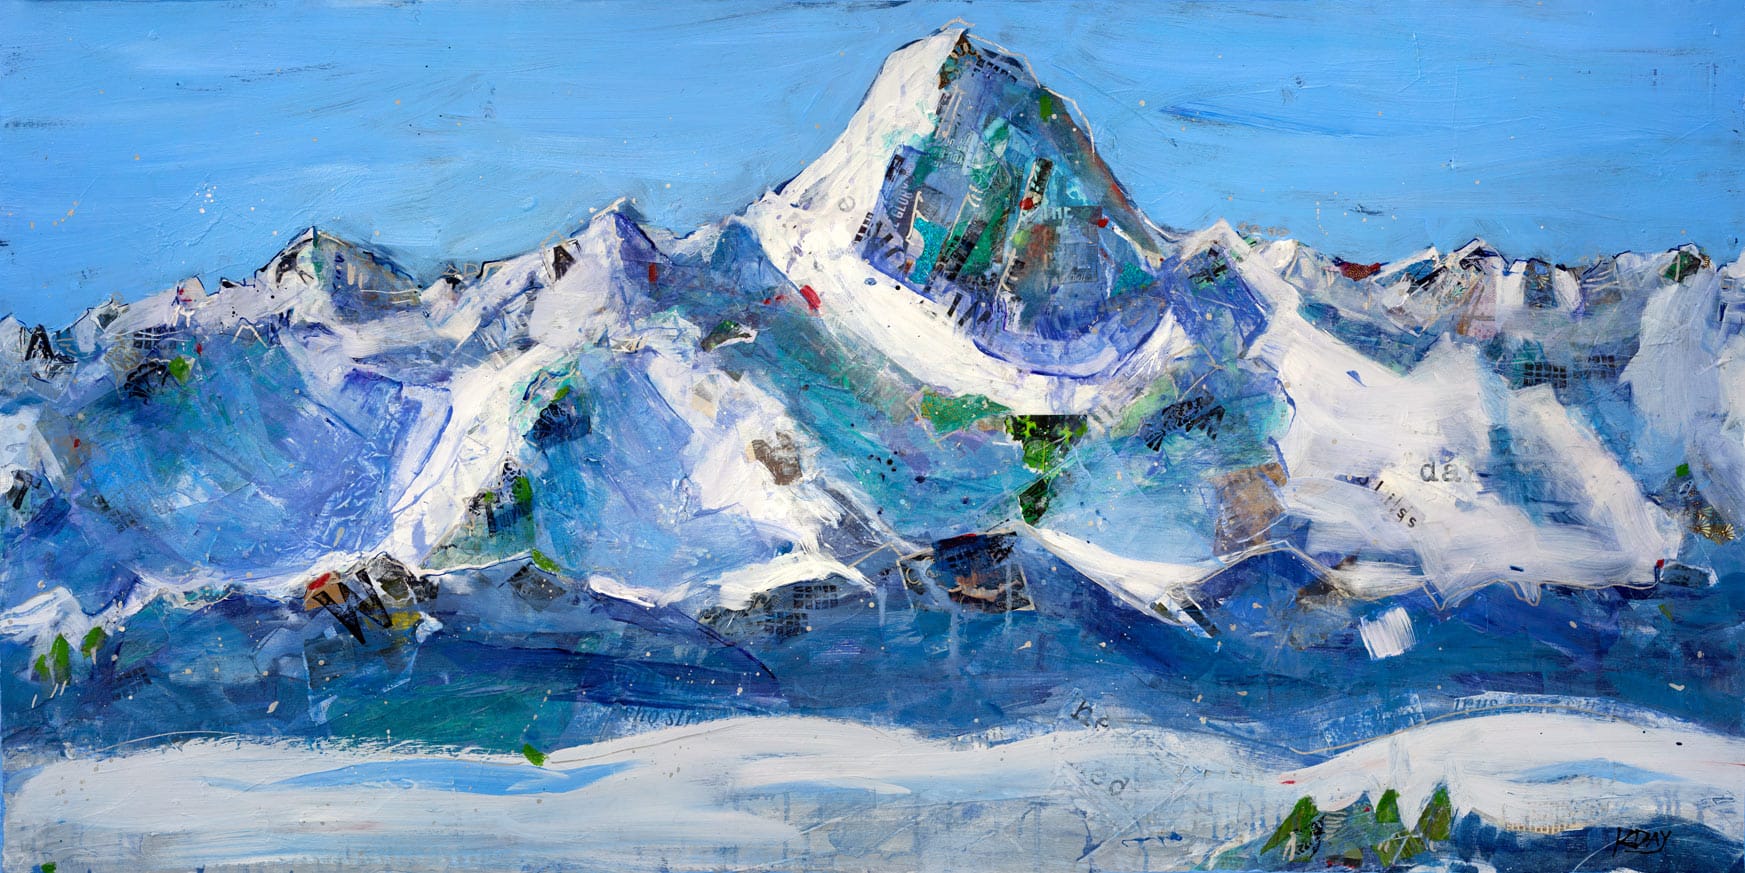 Wilson Peak, Telluride, Colorado, mixed media painting on canvas ©Kellie Day